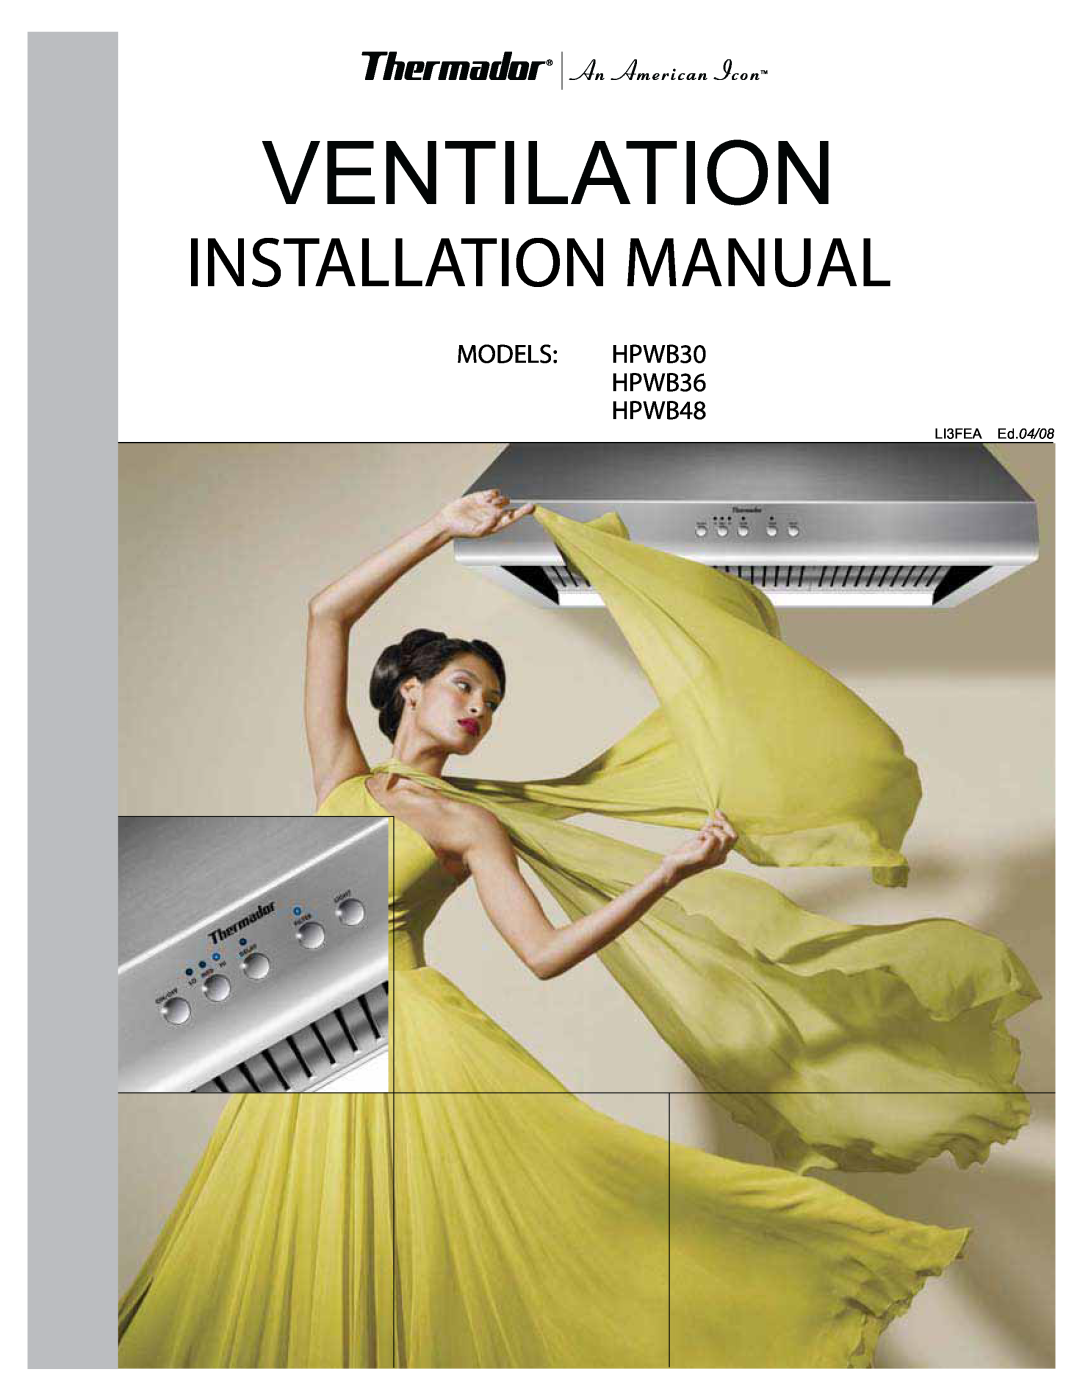 Thermador installation manual Installation Manual, MODELS HPWB30 HPWB36 HPWB48 